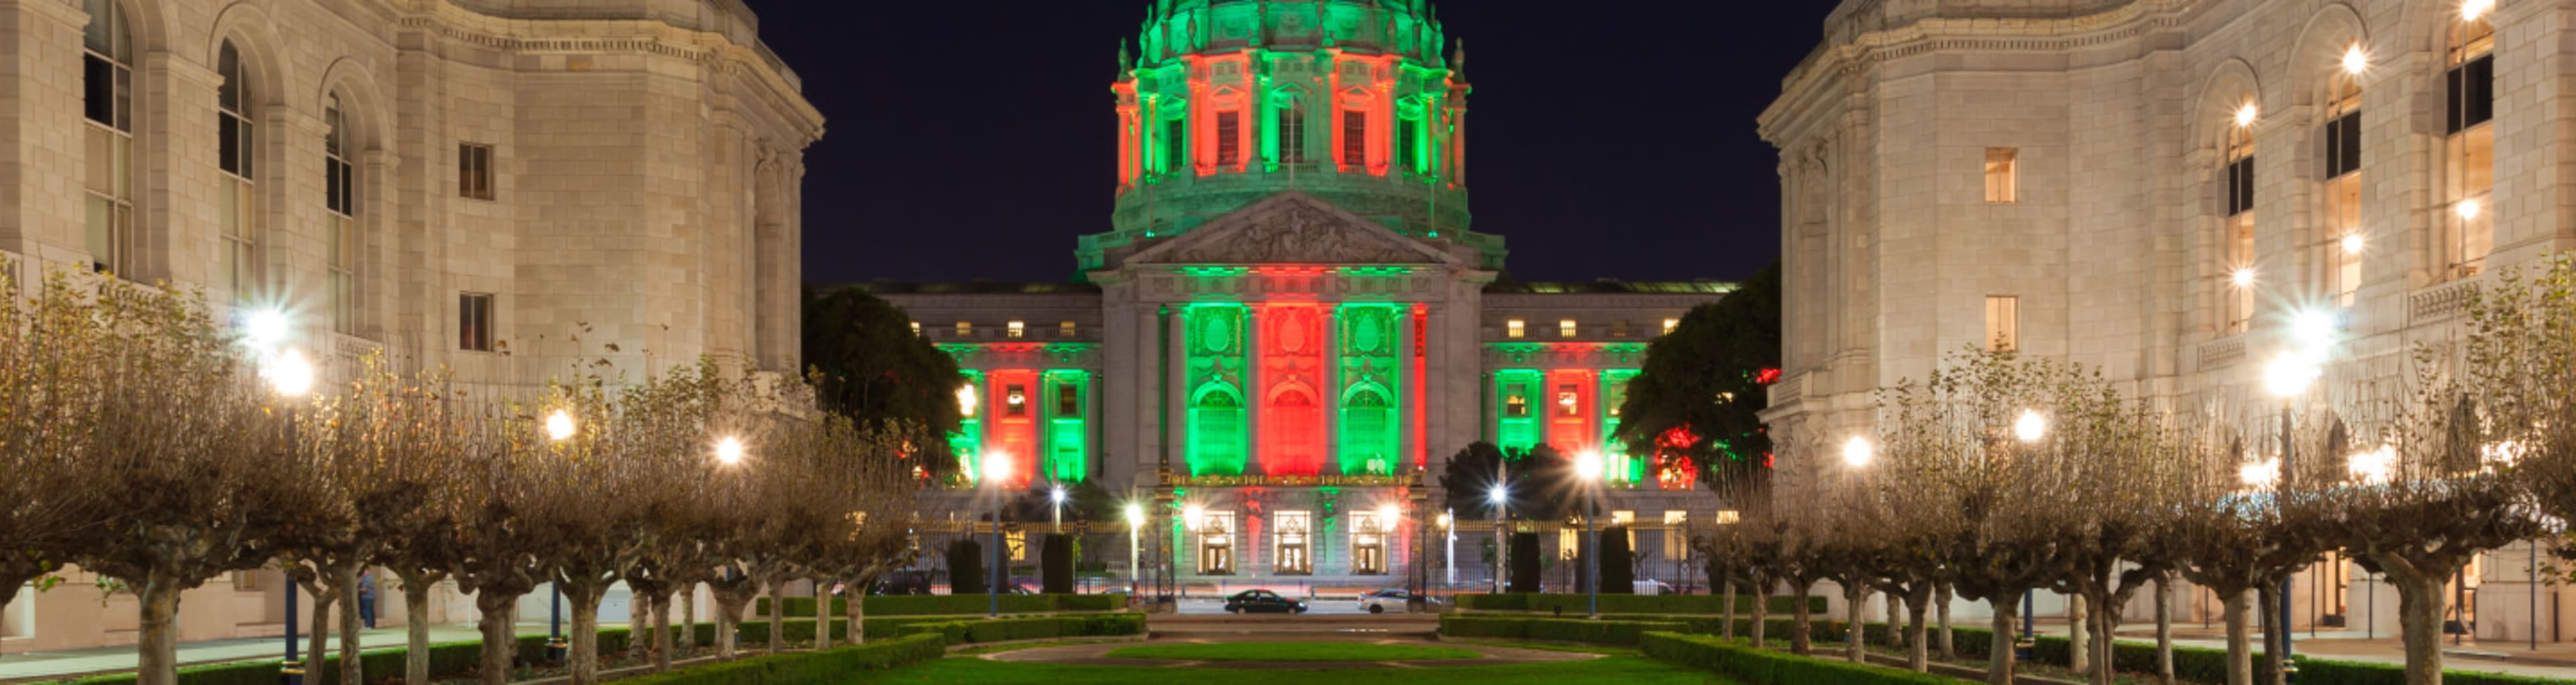 San Francisco City Hall illuminated in festive colors